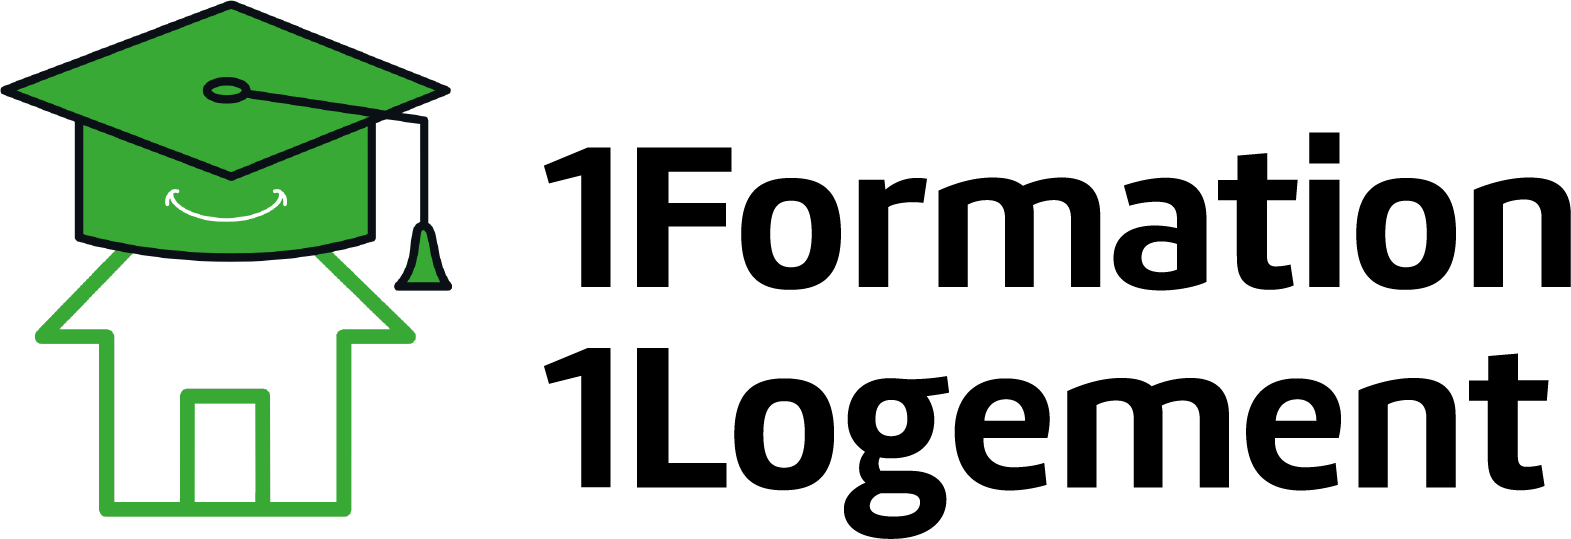 1formation-1logement-logotype-principal